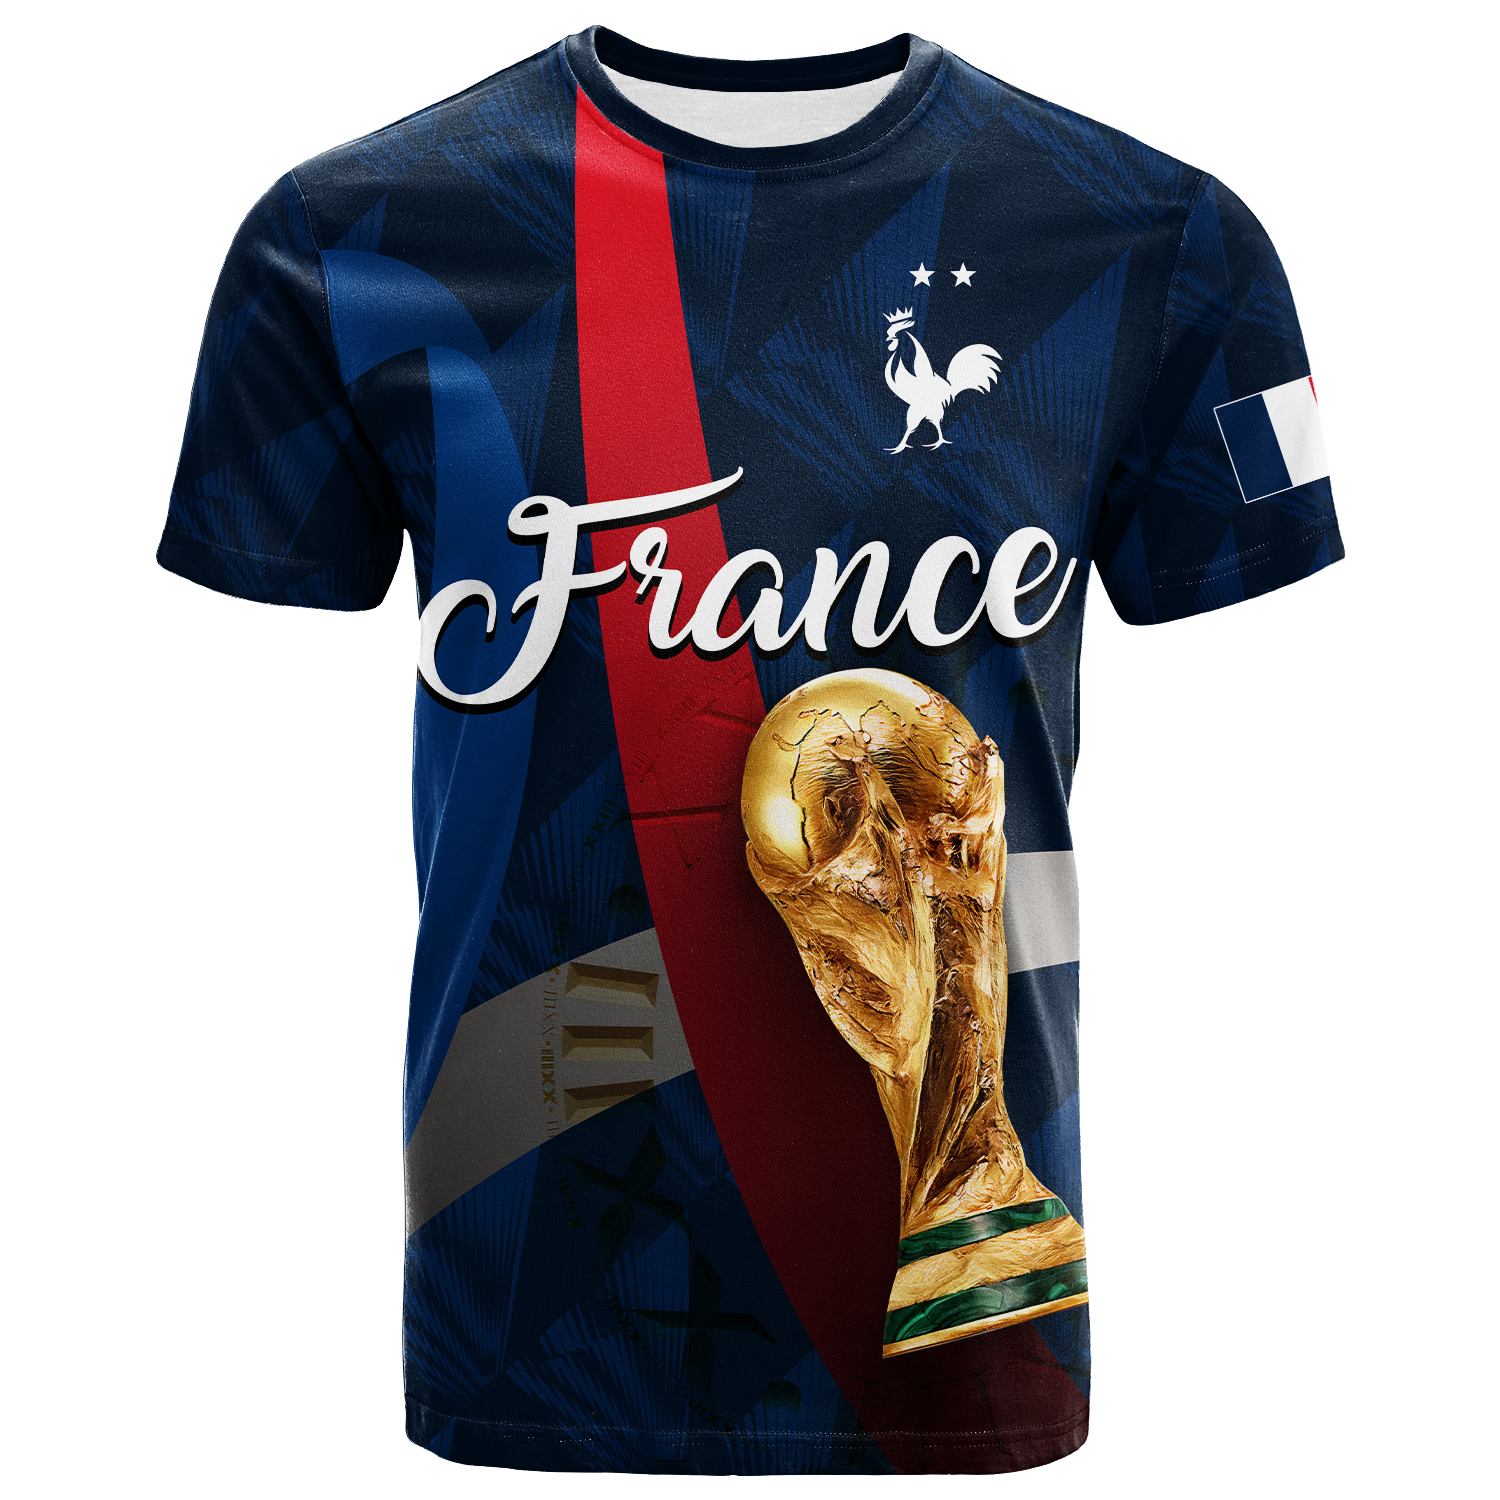 France Football World Cup 2022